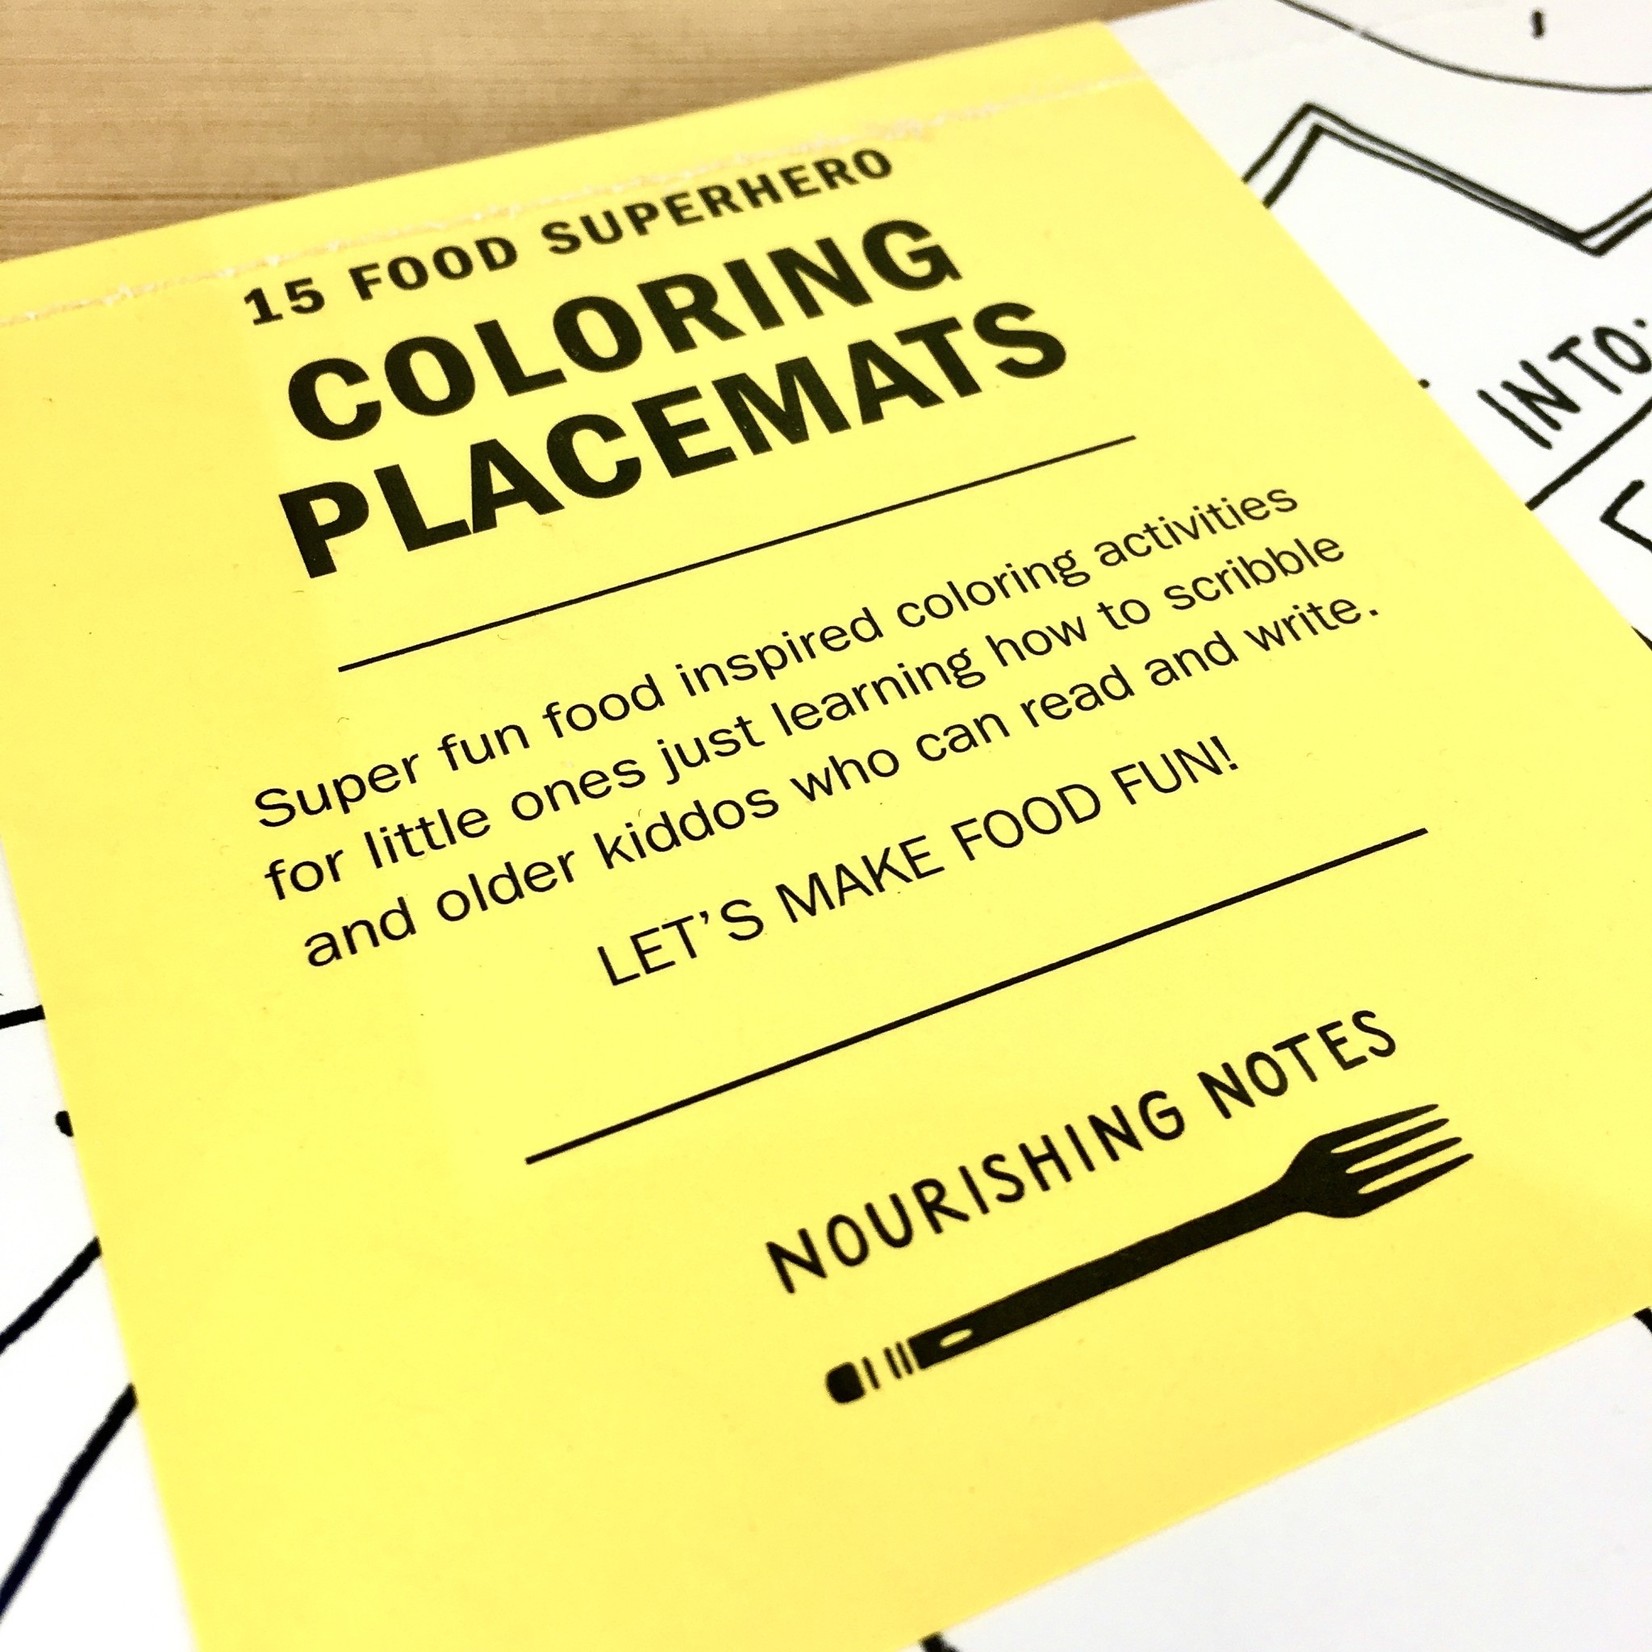 Nourishing Notes 15 Food Superhero Coloring Placemats